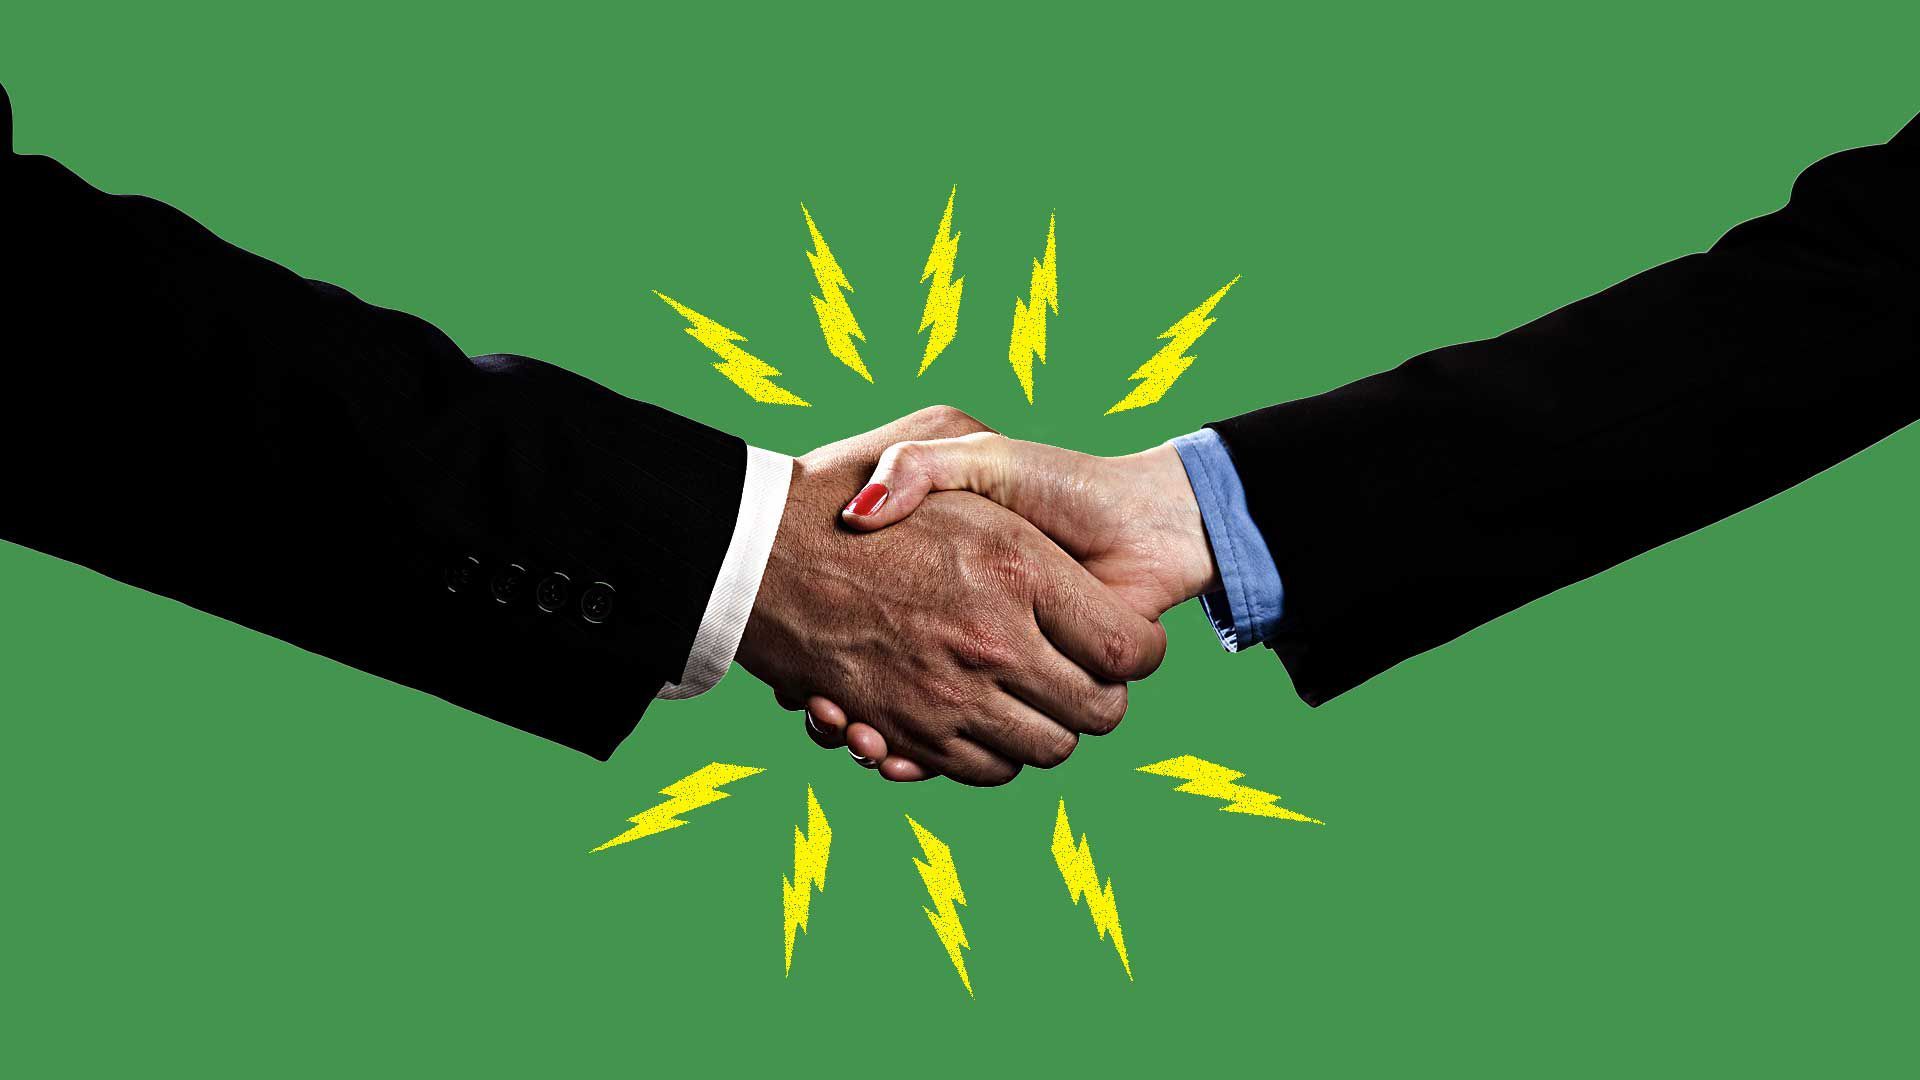 A handshake emitting electrical sparks